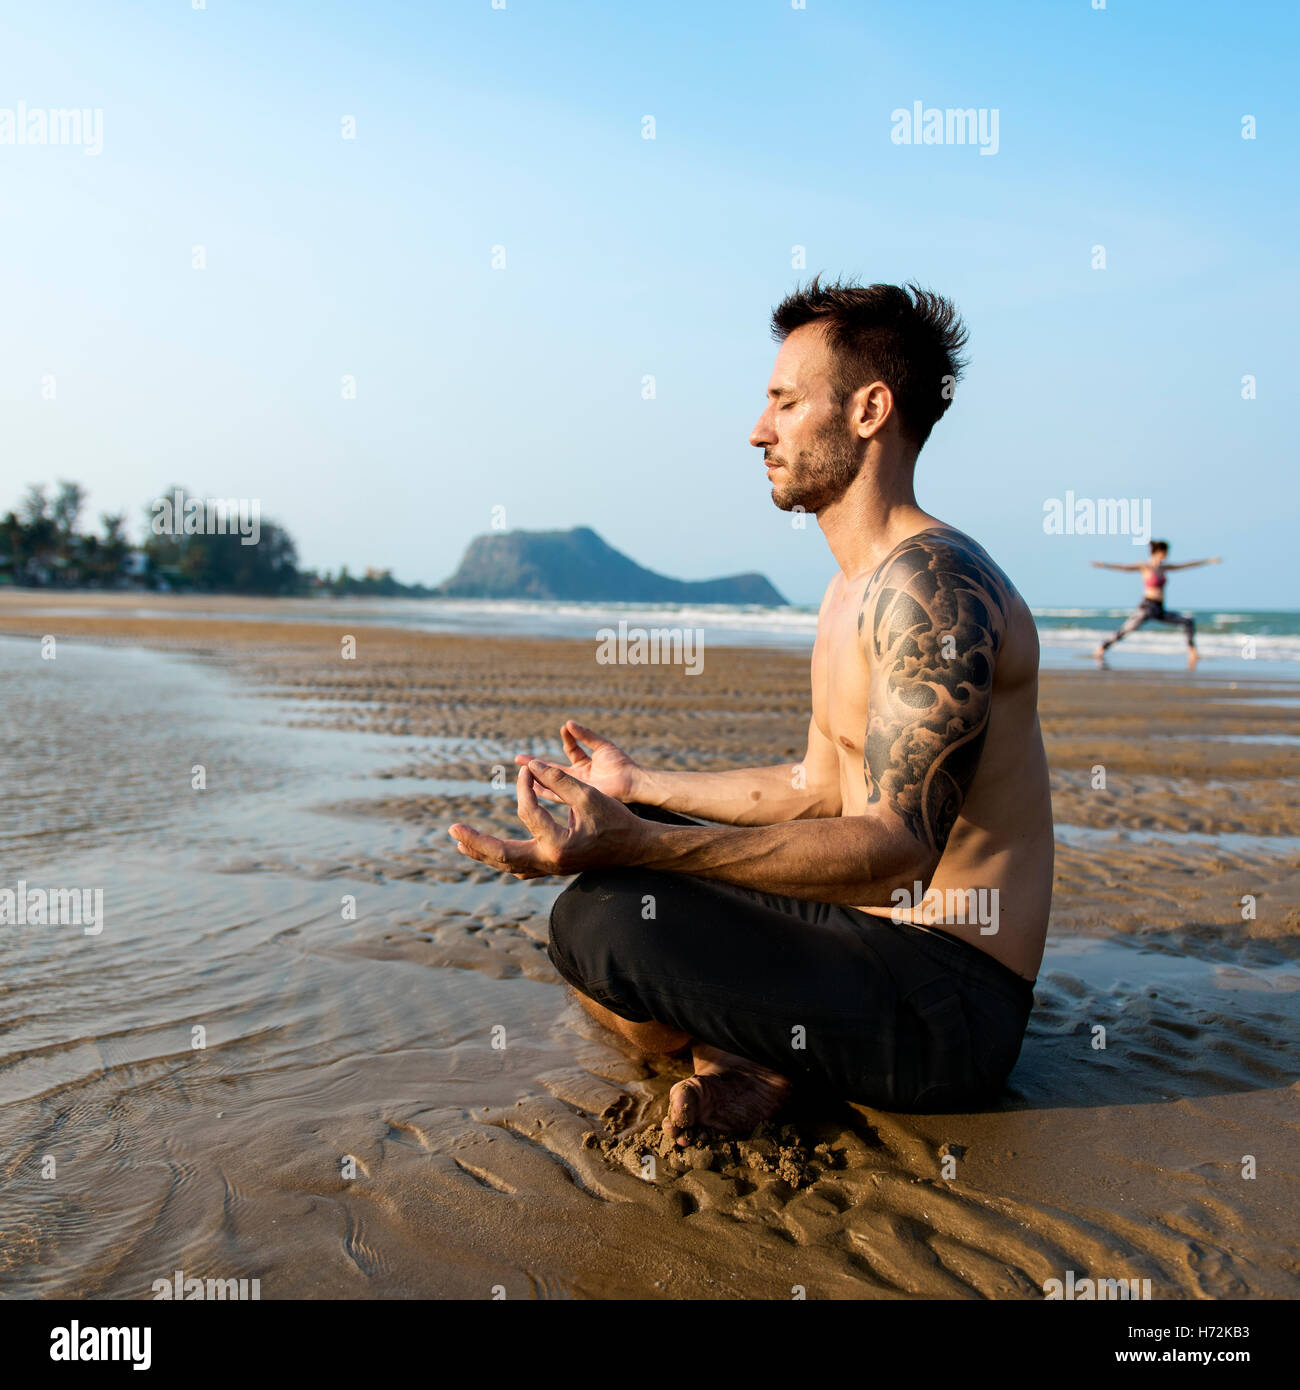 Yoga-Meditation-Konzentration-friedliche Ruhe und Entspannung-Konzept Stockfoto